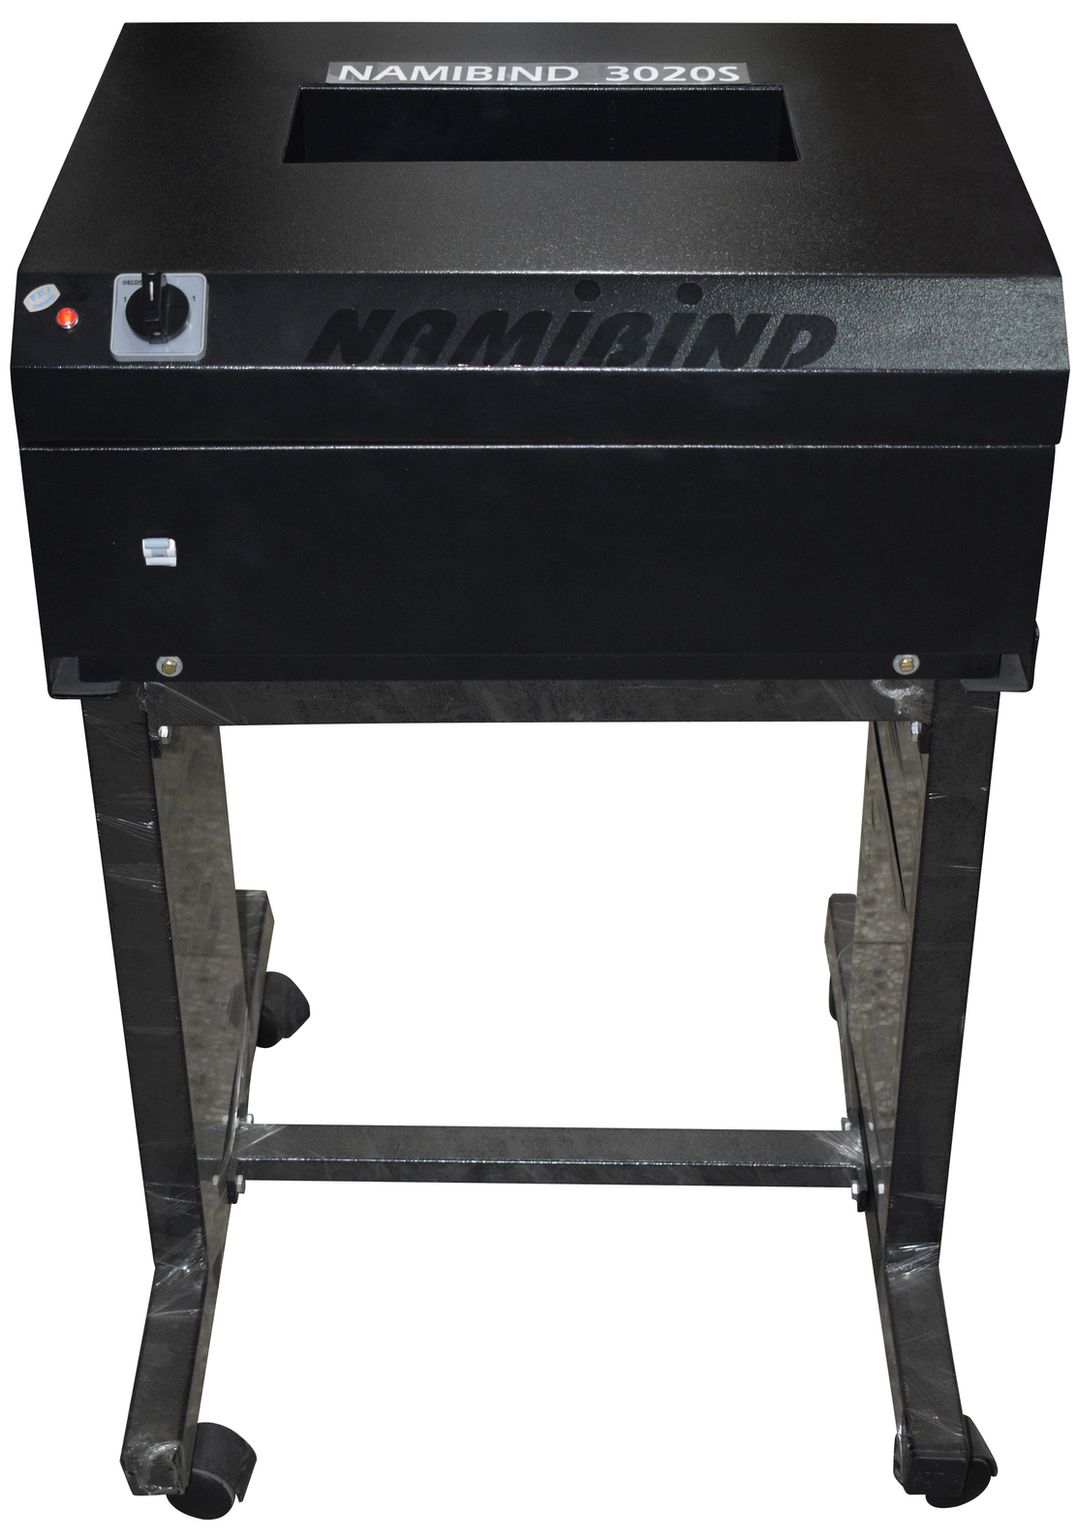 namibind-metallic-body-cross-cut-shredder-3020s